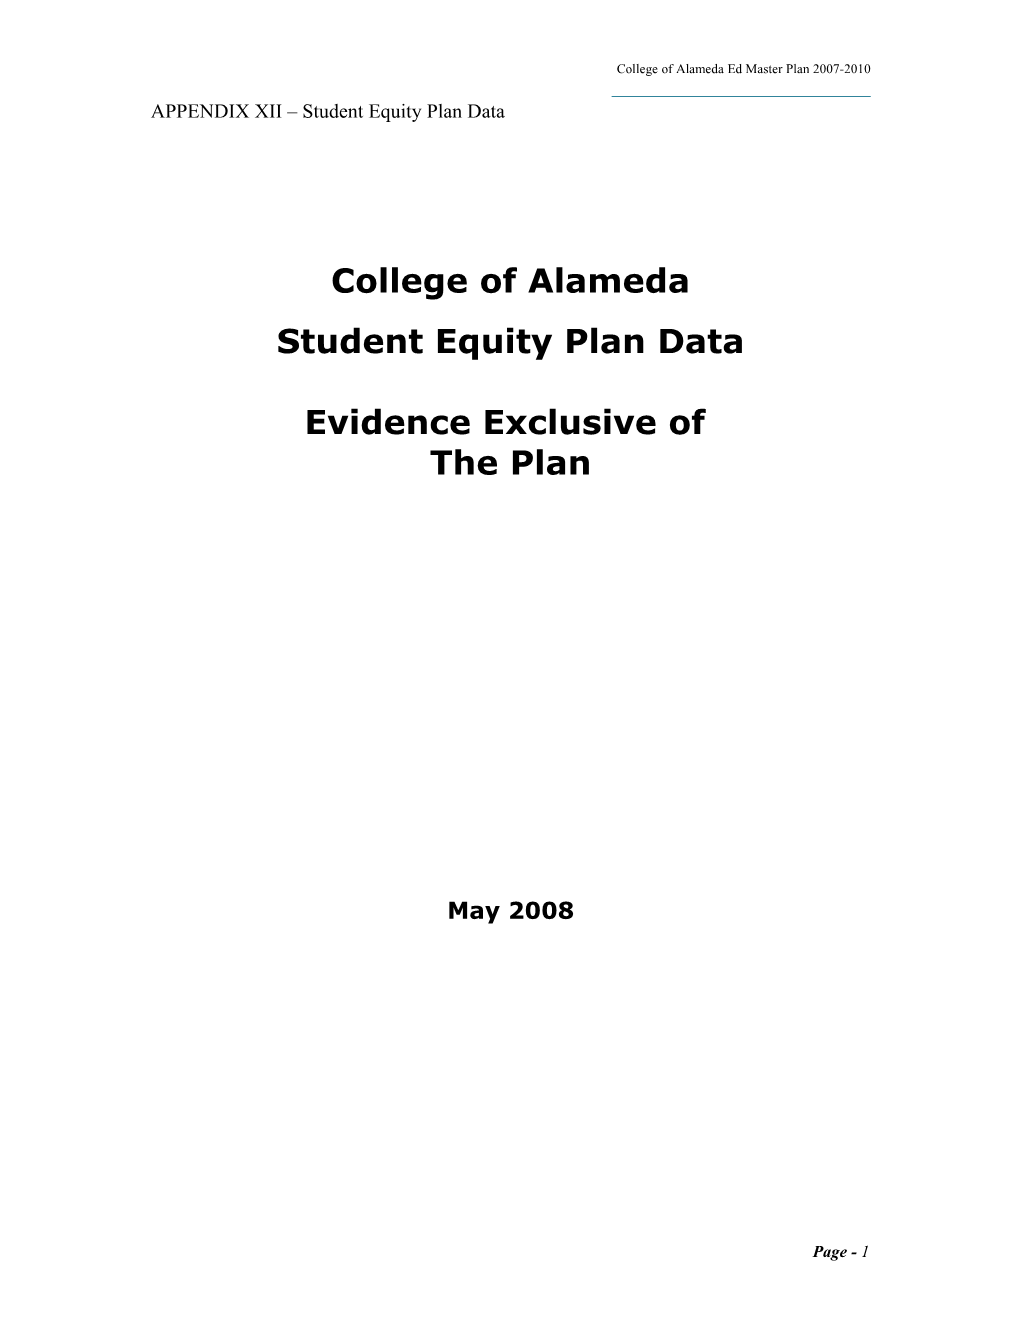 Student Equity Plan Data